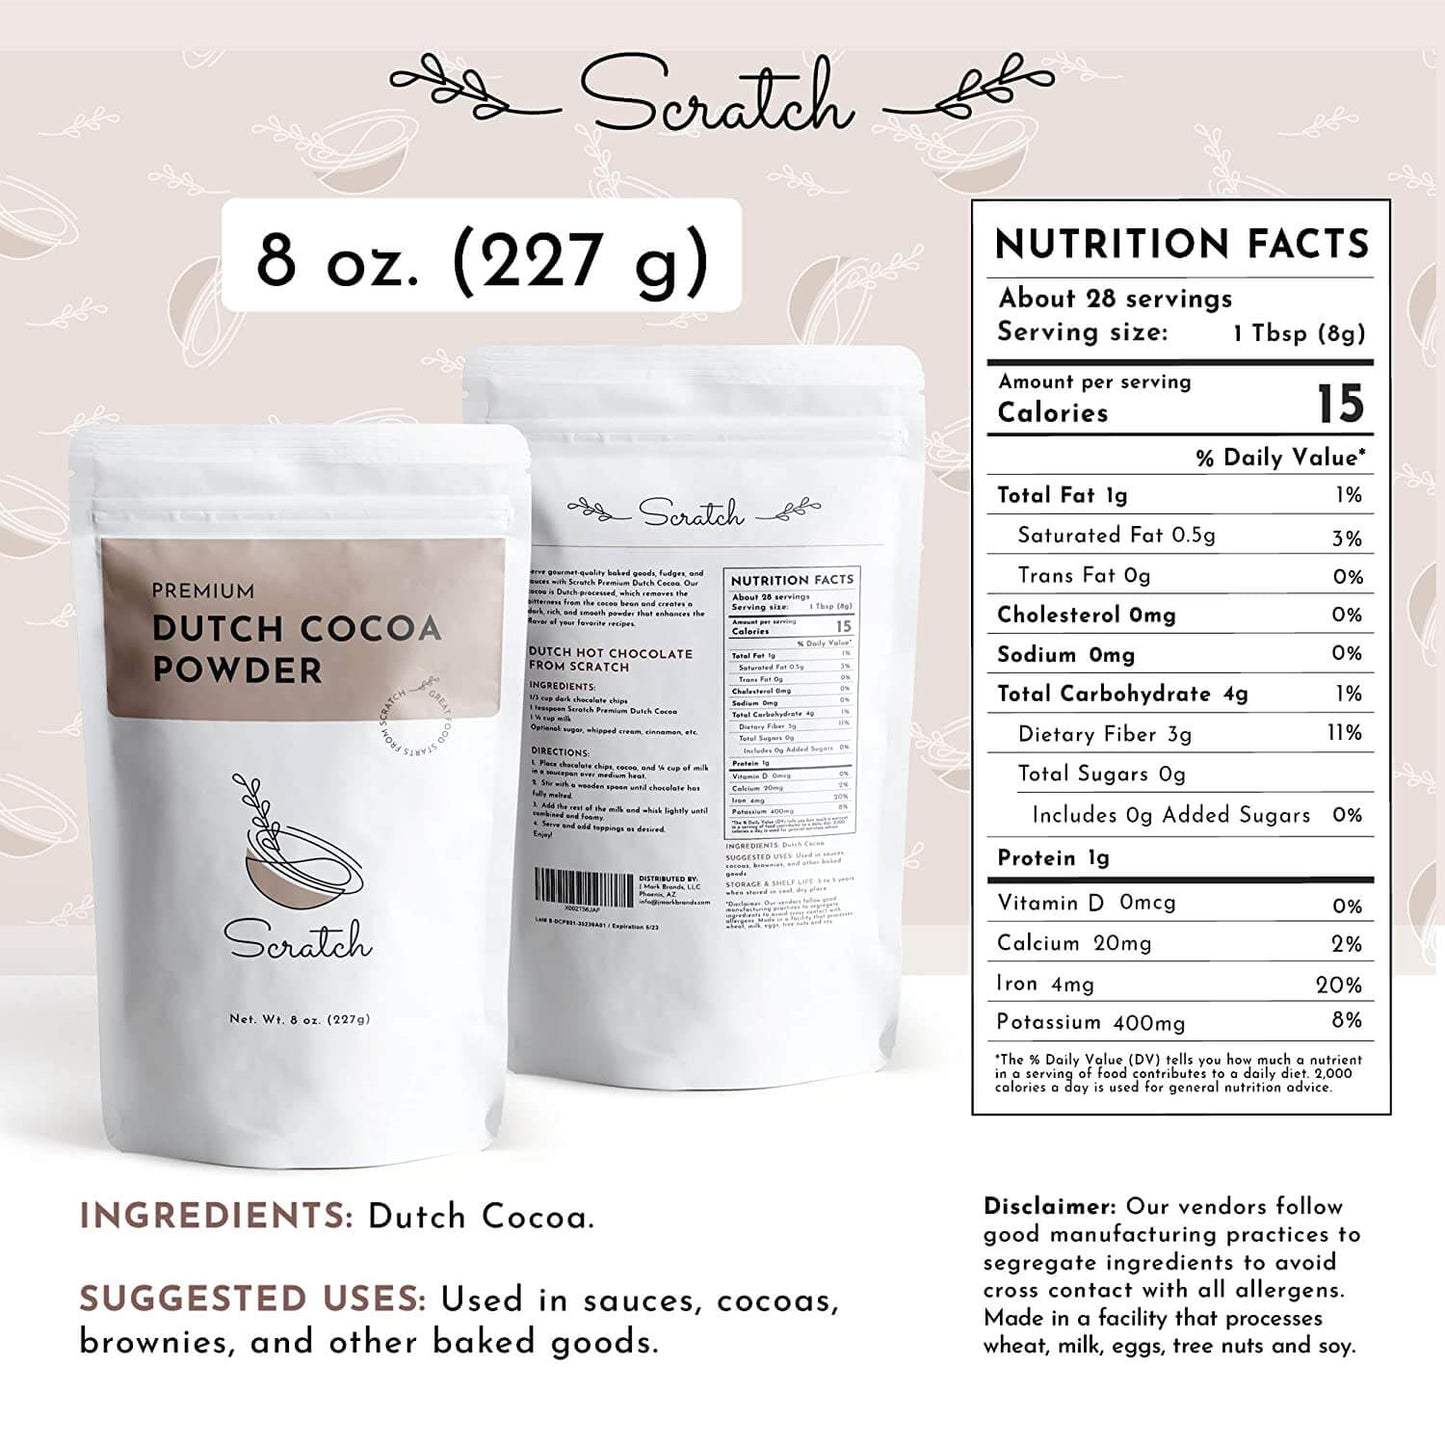 Scratch Premium Dutch Cocoa Powder - 8 oz - Nutritional Facts